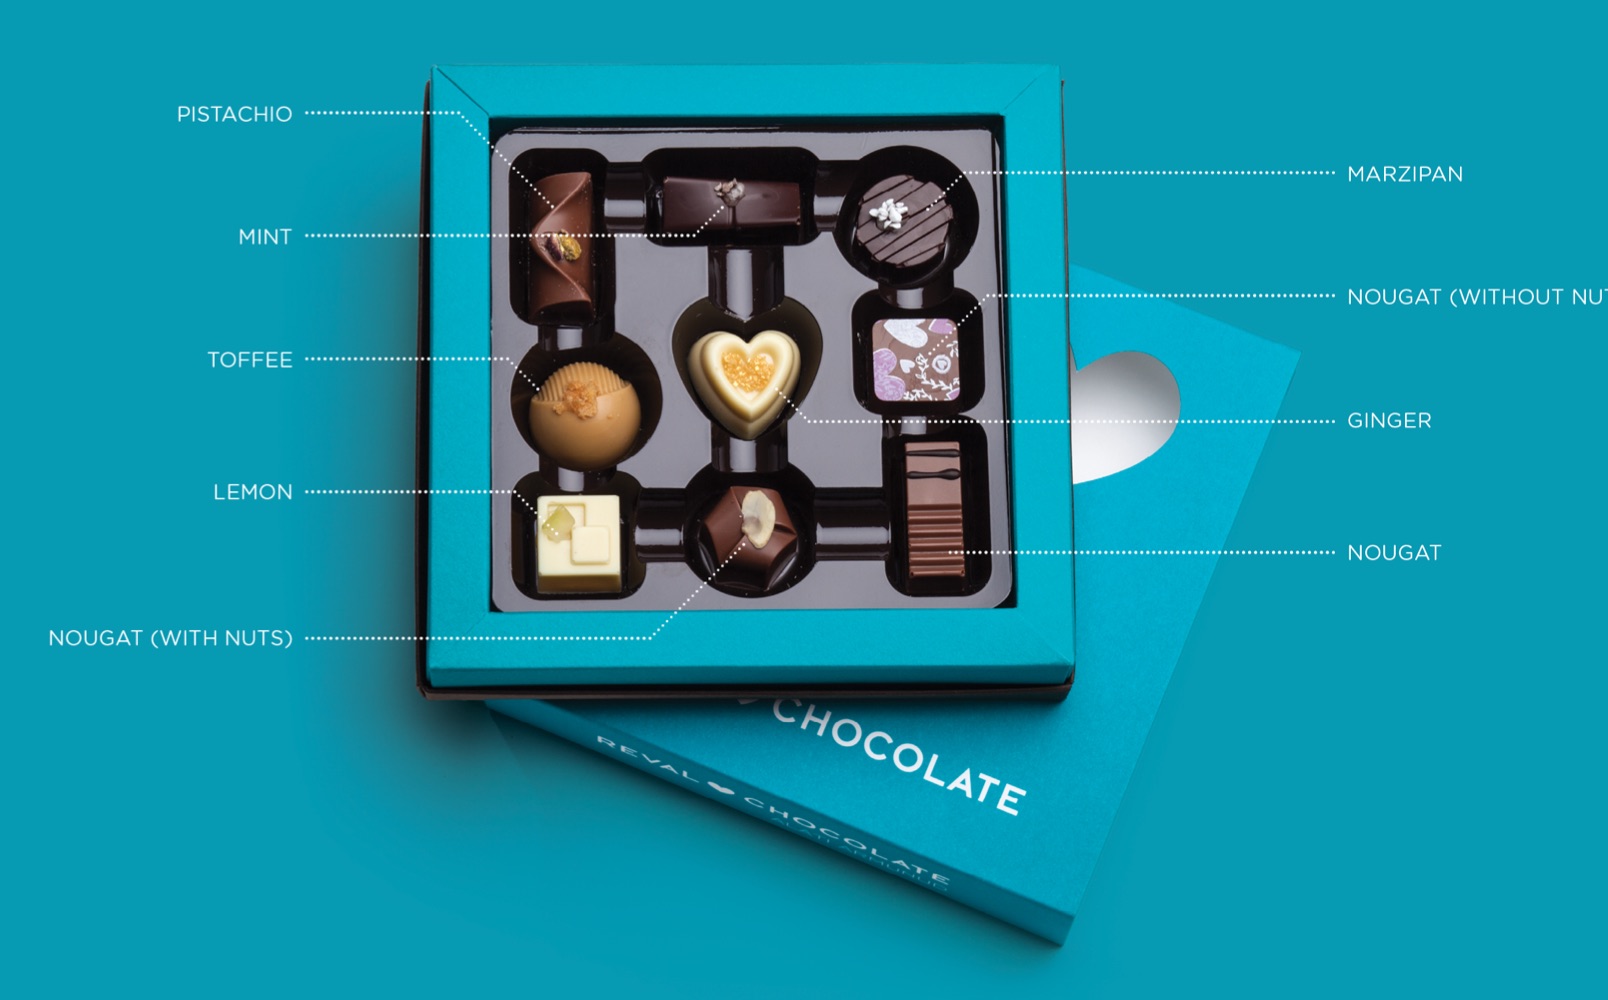 thiết kế bao bì sản phẩm của Reval Chocolate Always in love